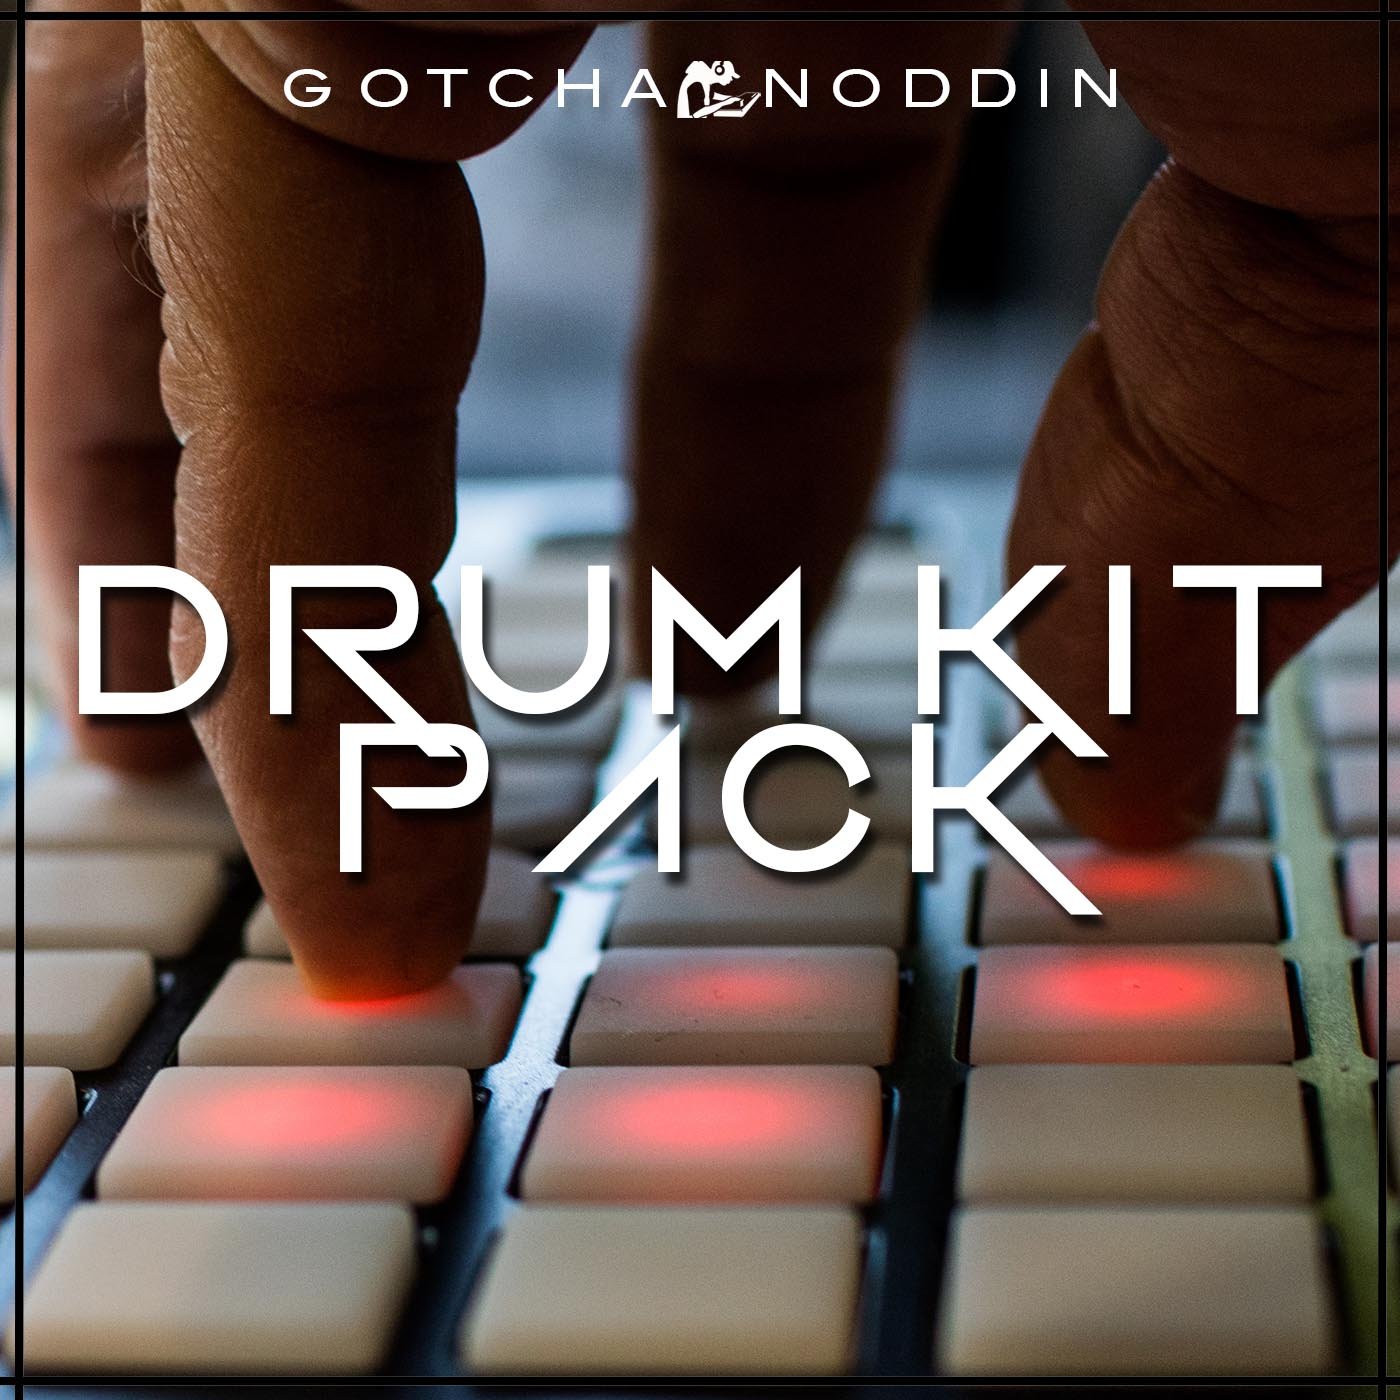 drum kit pack